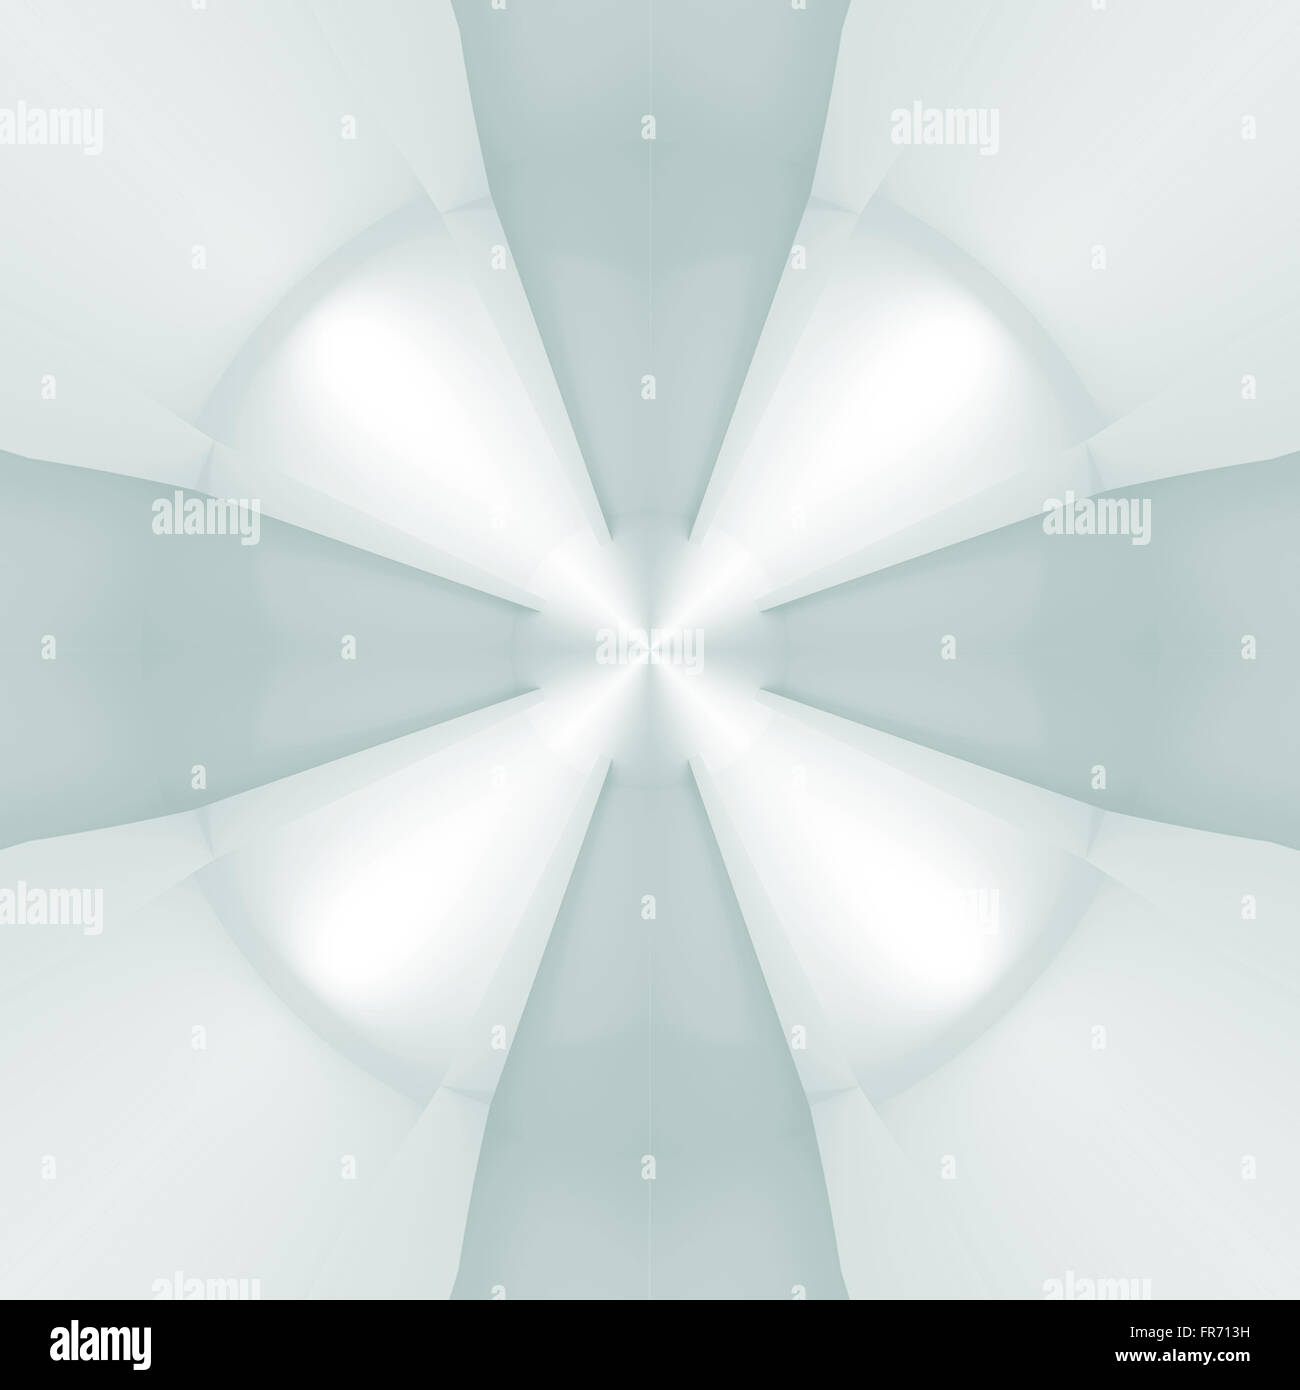 Abstract light blue propulsion background pattern. 3d illustration Stock Photo